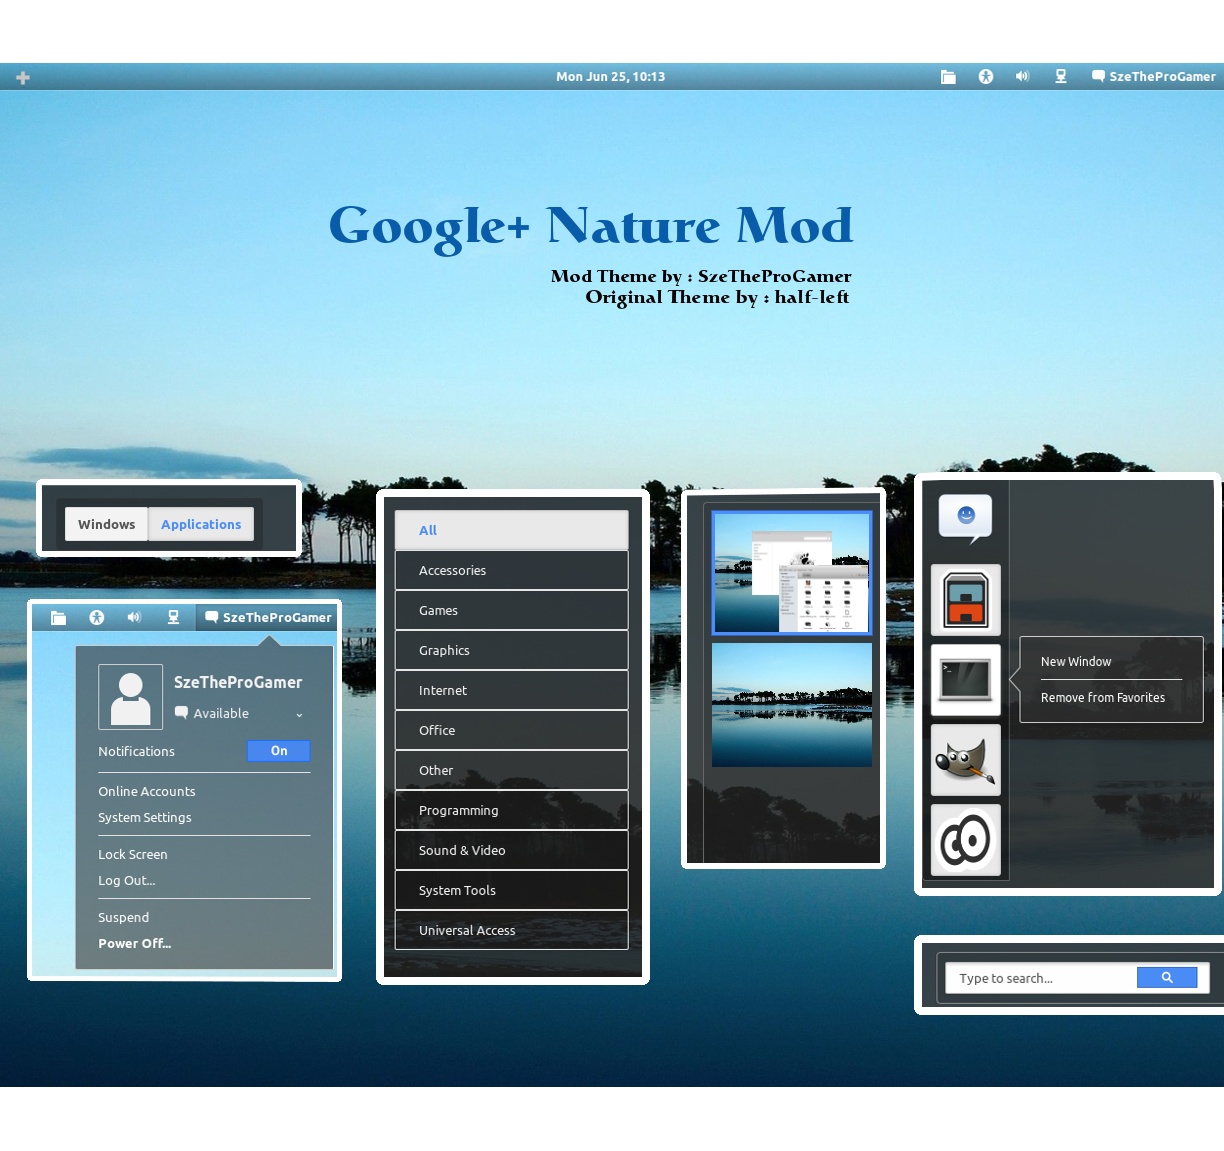 Google+ Nature Mod